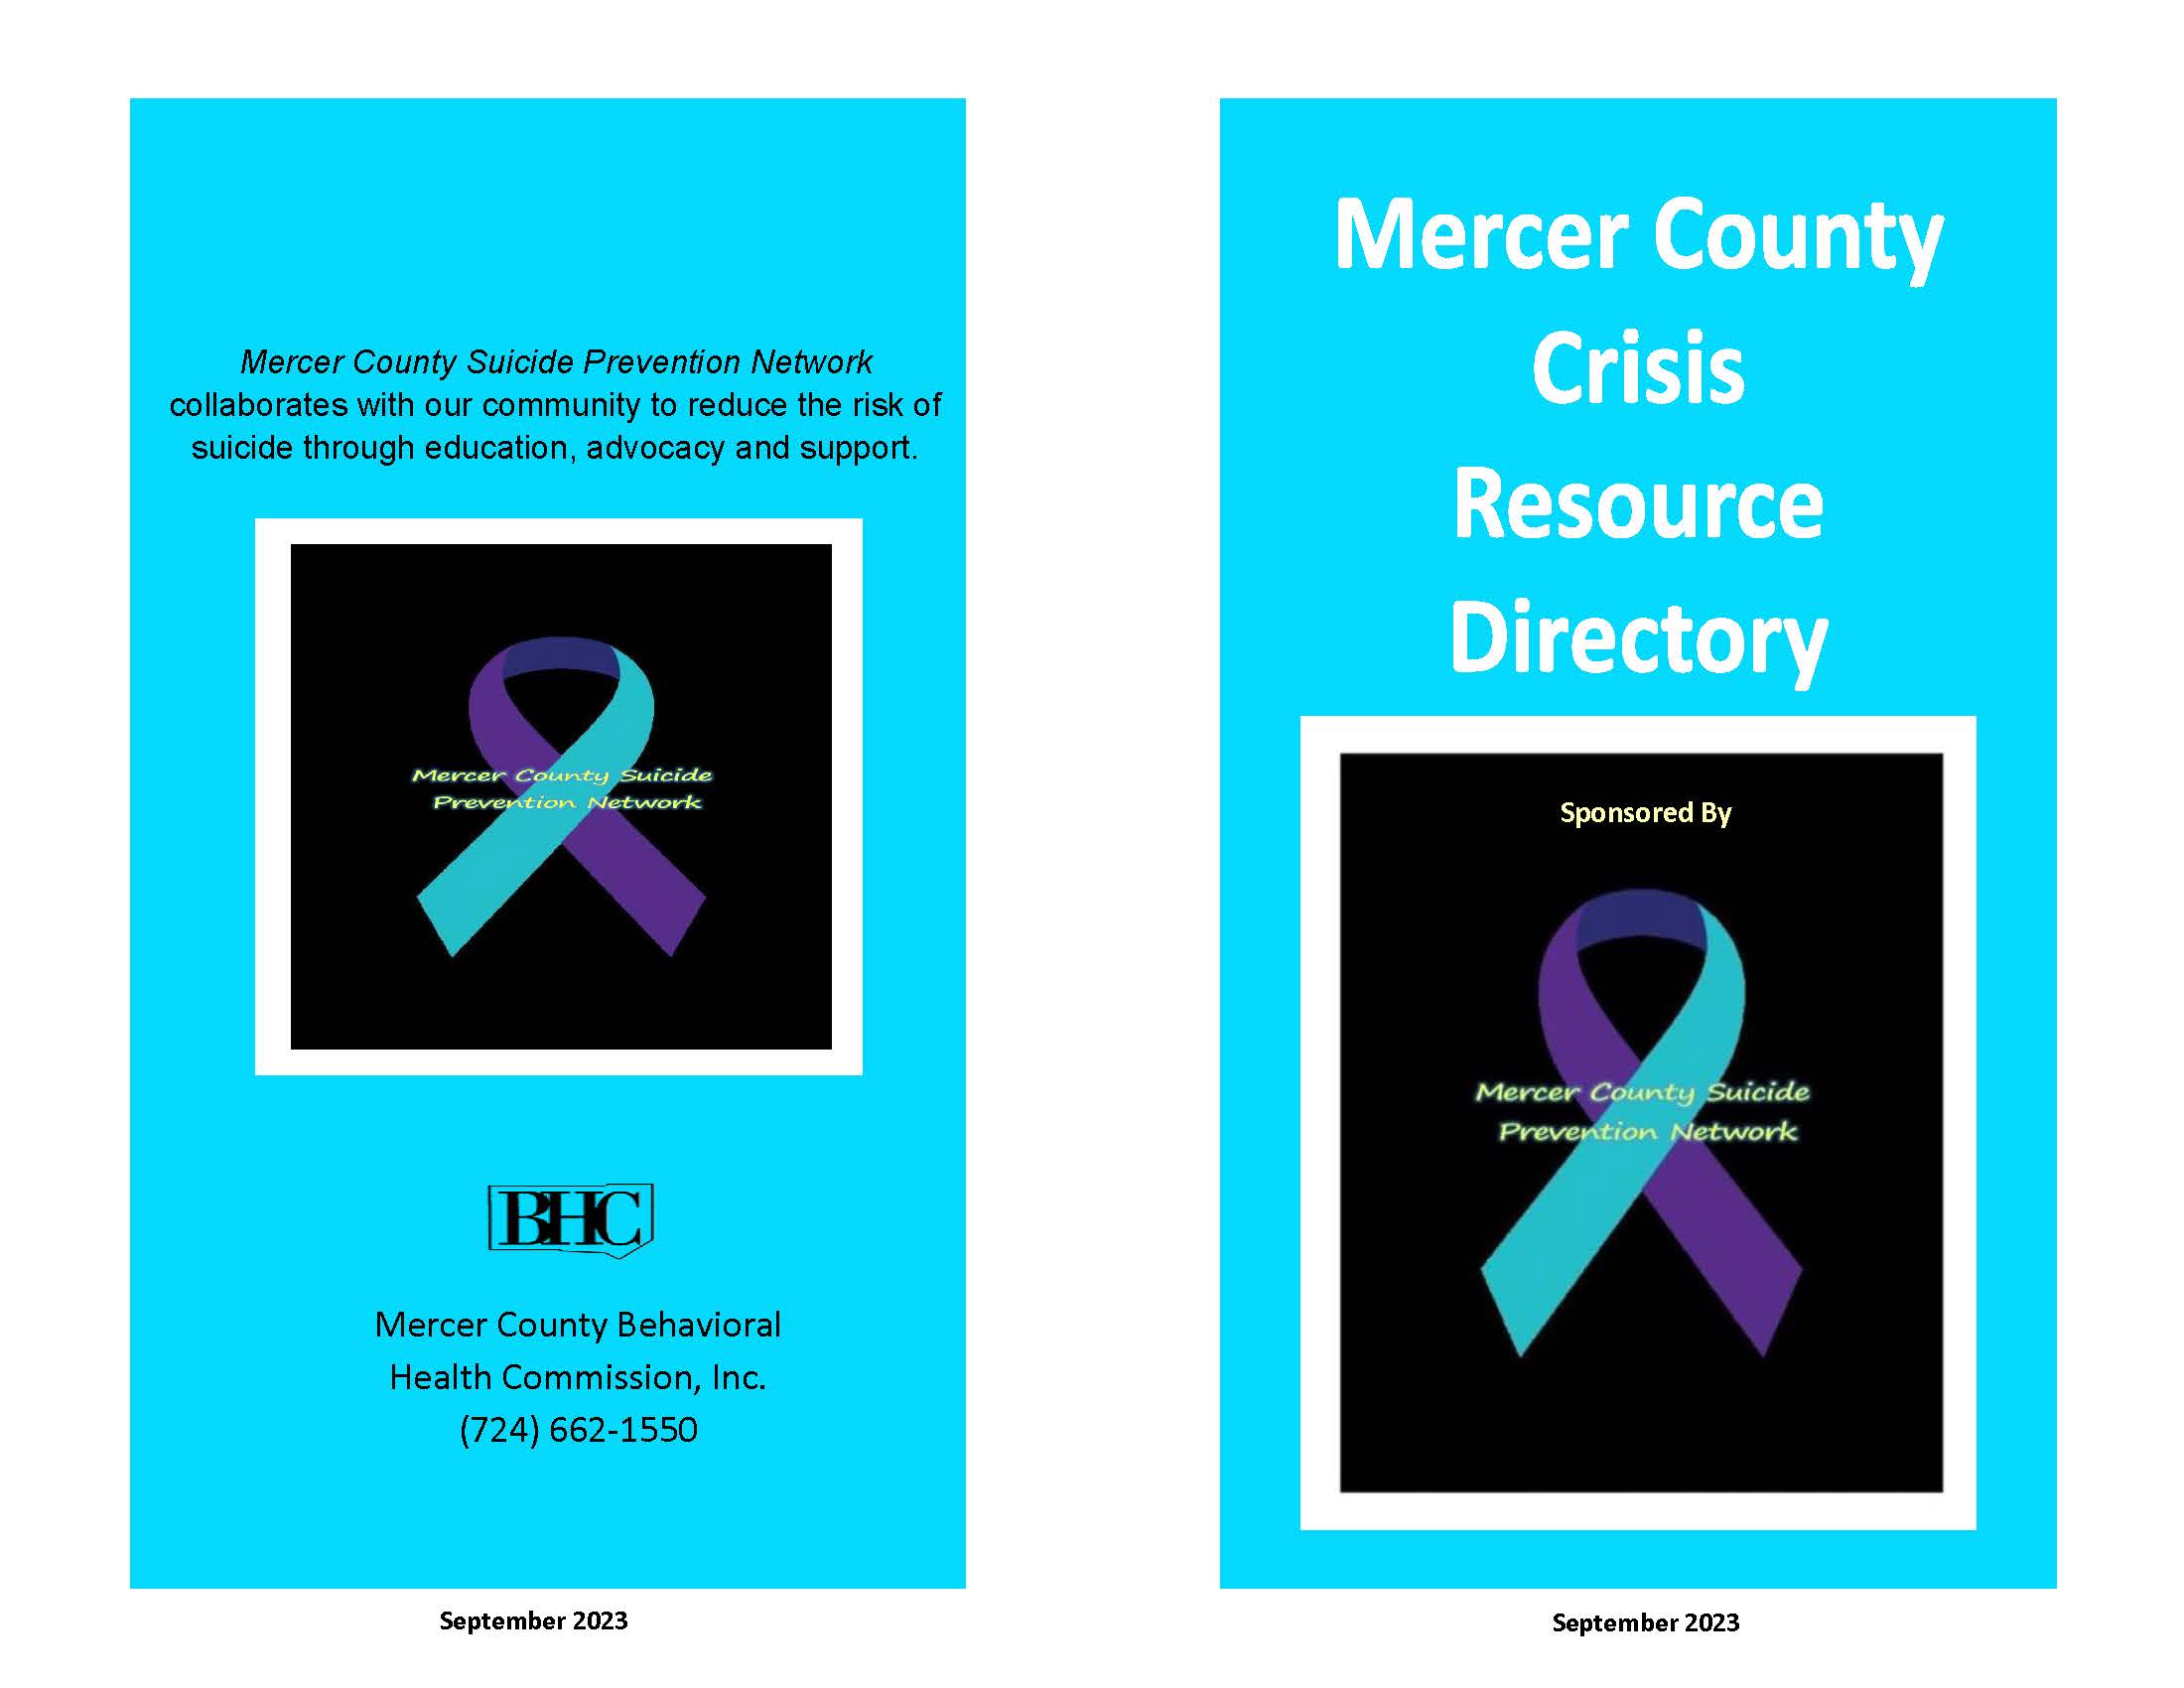 Mercer County Crisis Resource Directory 
Flyer